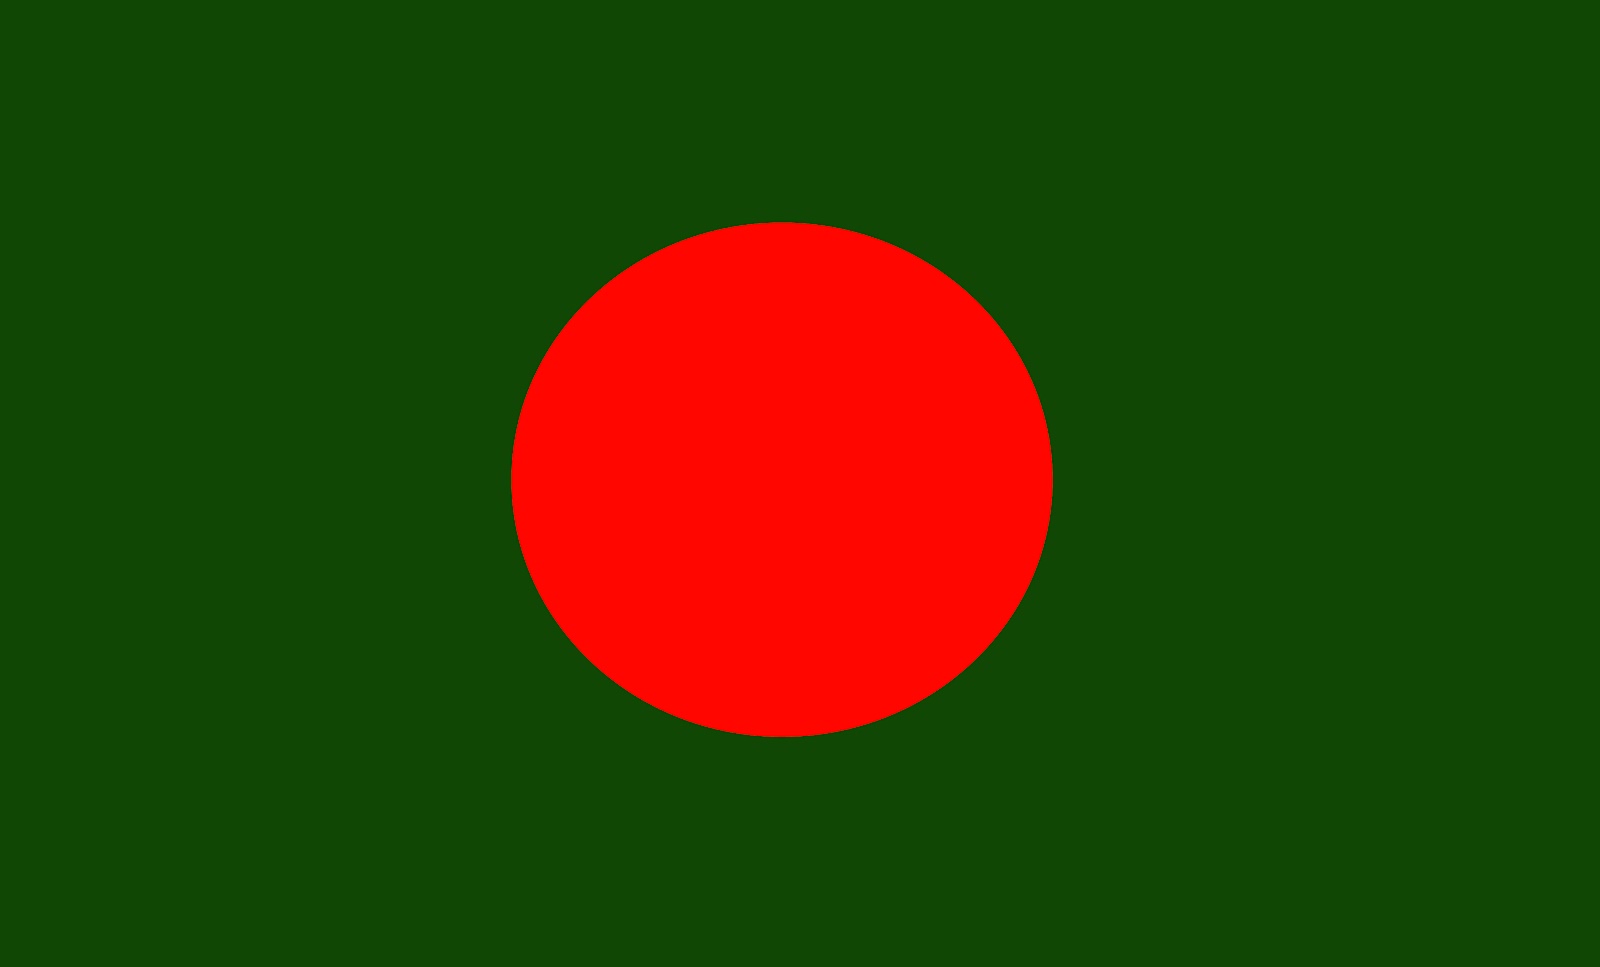 bangladesh flag fondos de pantalla hd,verde,rojo,bandera,circulo,colorido